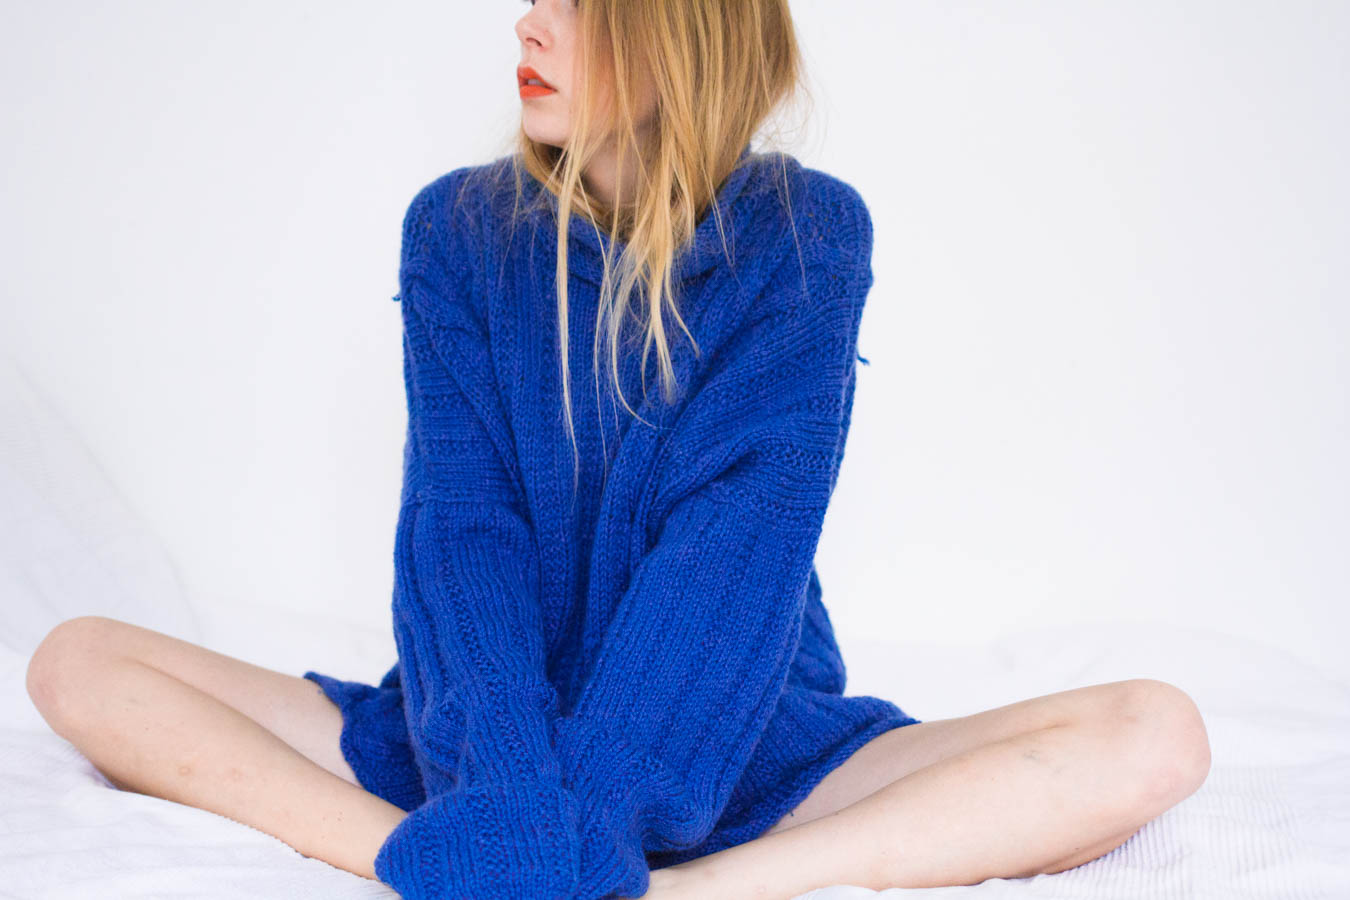 nemesis babe blog marie jensen blue knit sunday post-3